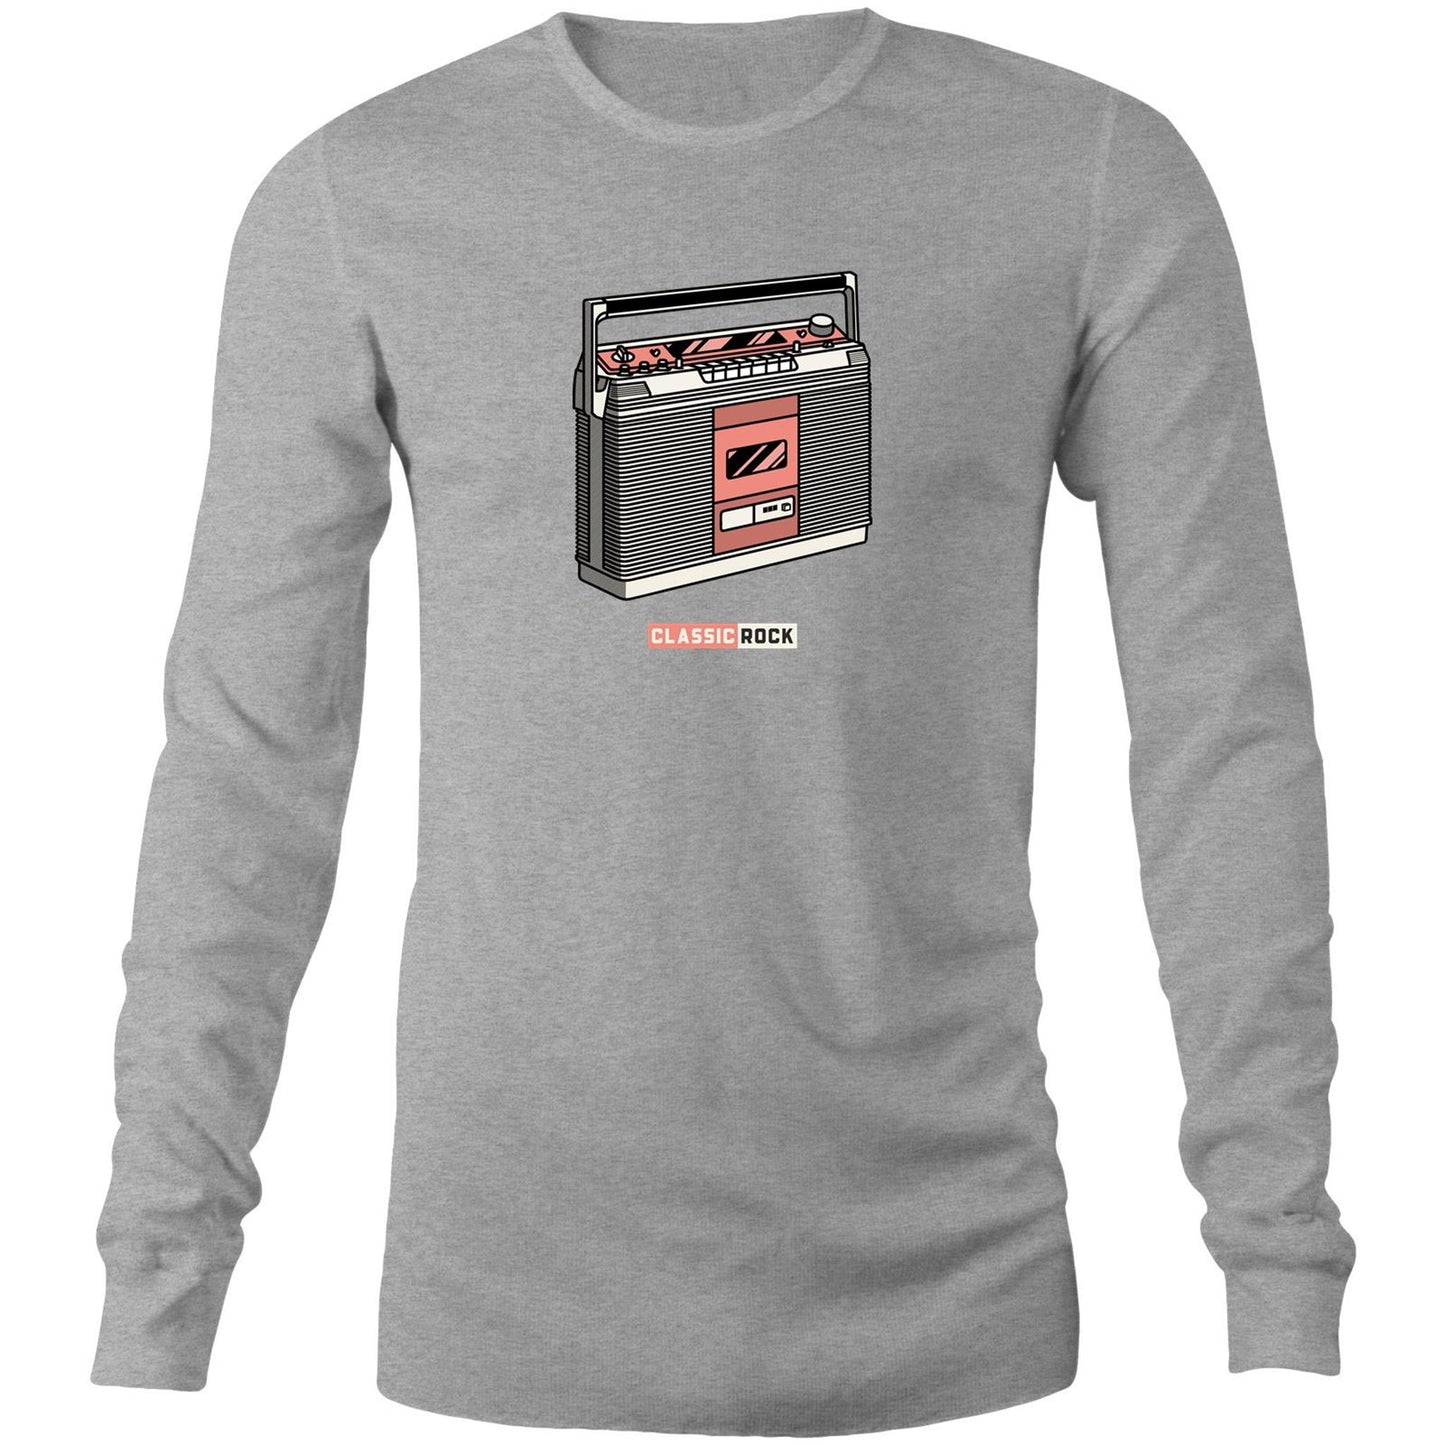 Classic Rock, Cassette Player - Long Sleeve T-Shirt Grey Marle Unisex Long Sleeve T-shirt Music Retro